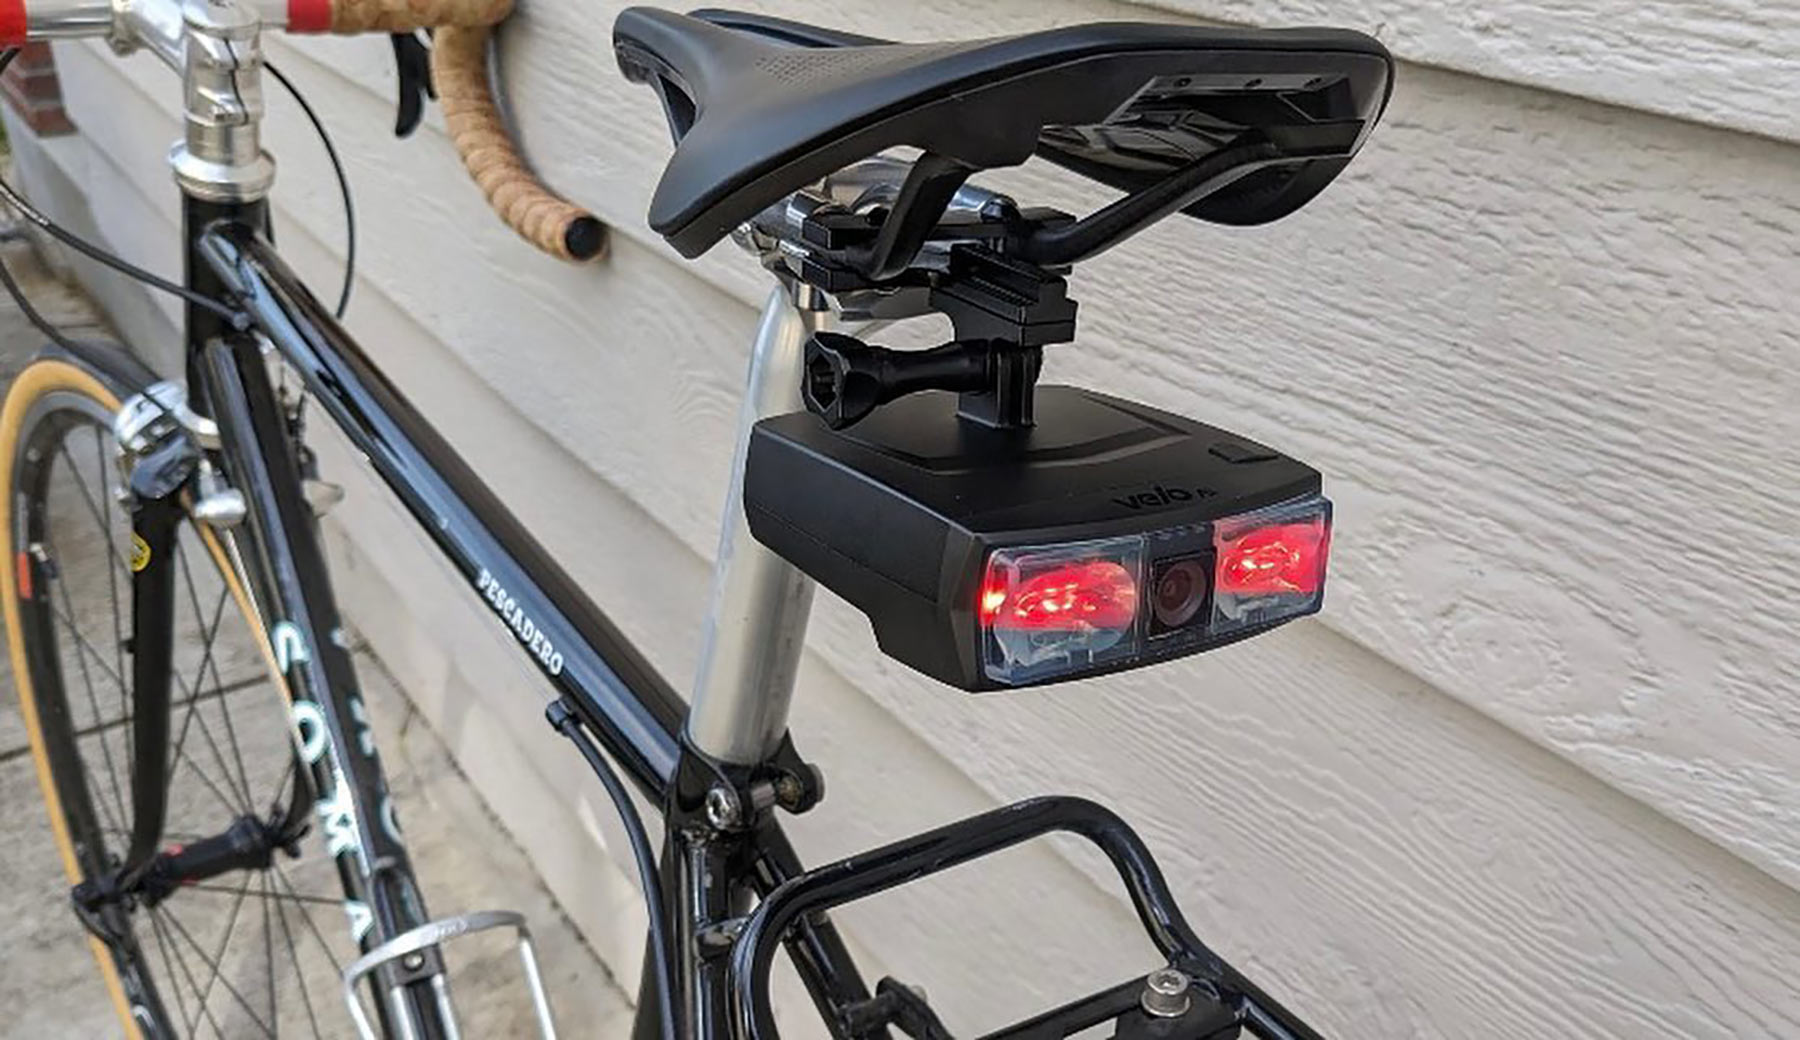 velo ai bike taillight shown on a commuter bike